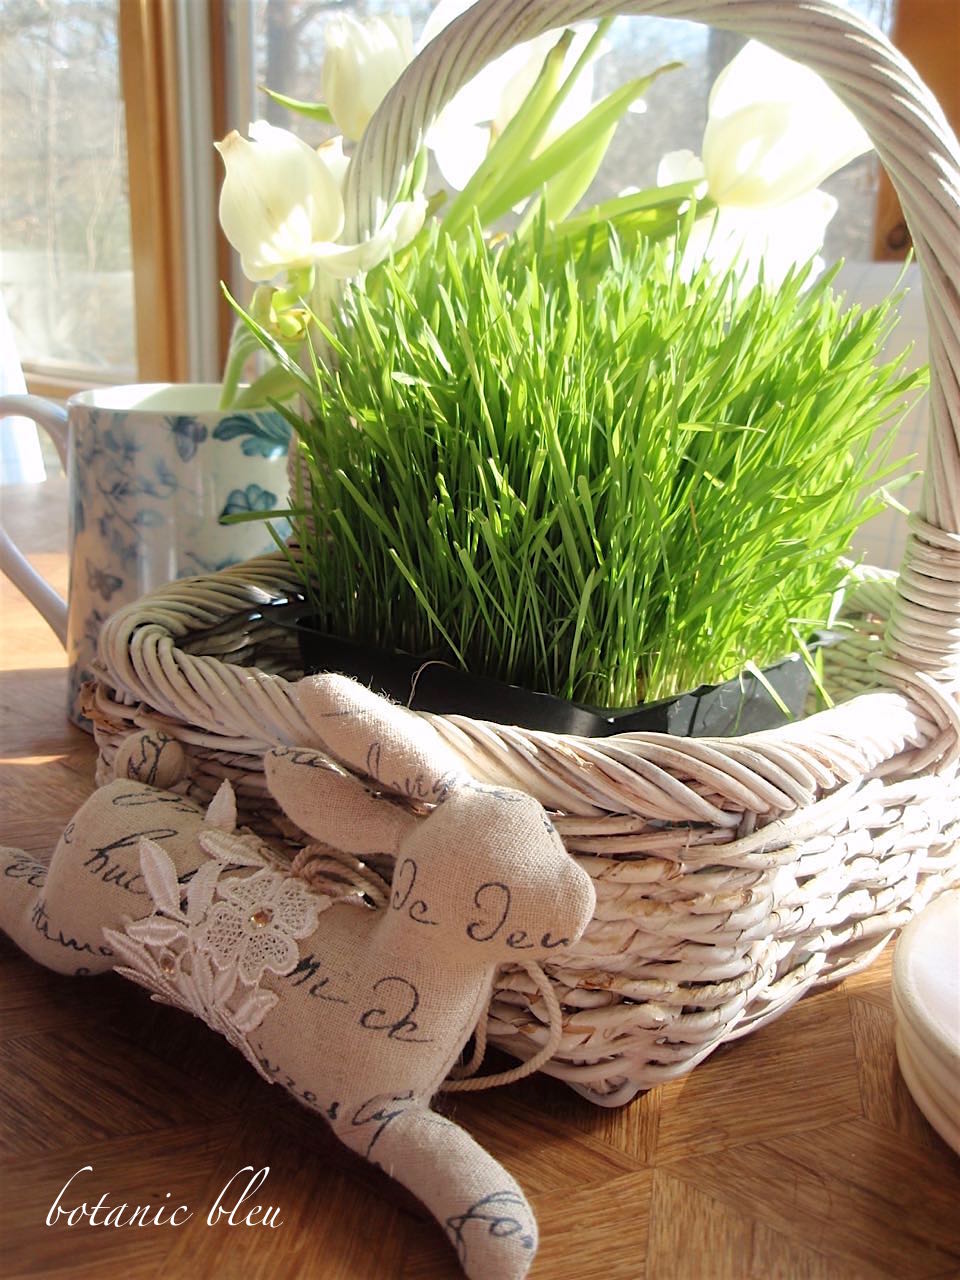 How to Make a Wheatgrass Easter Basket